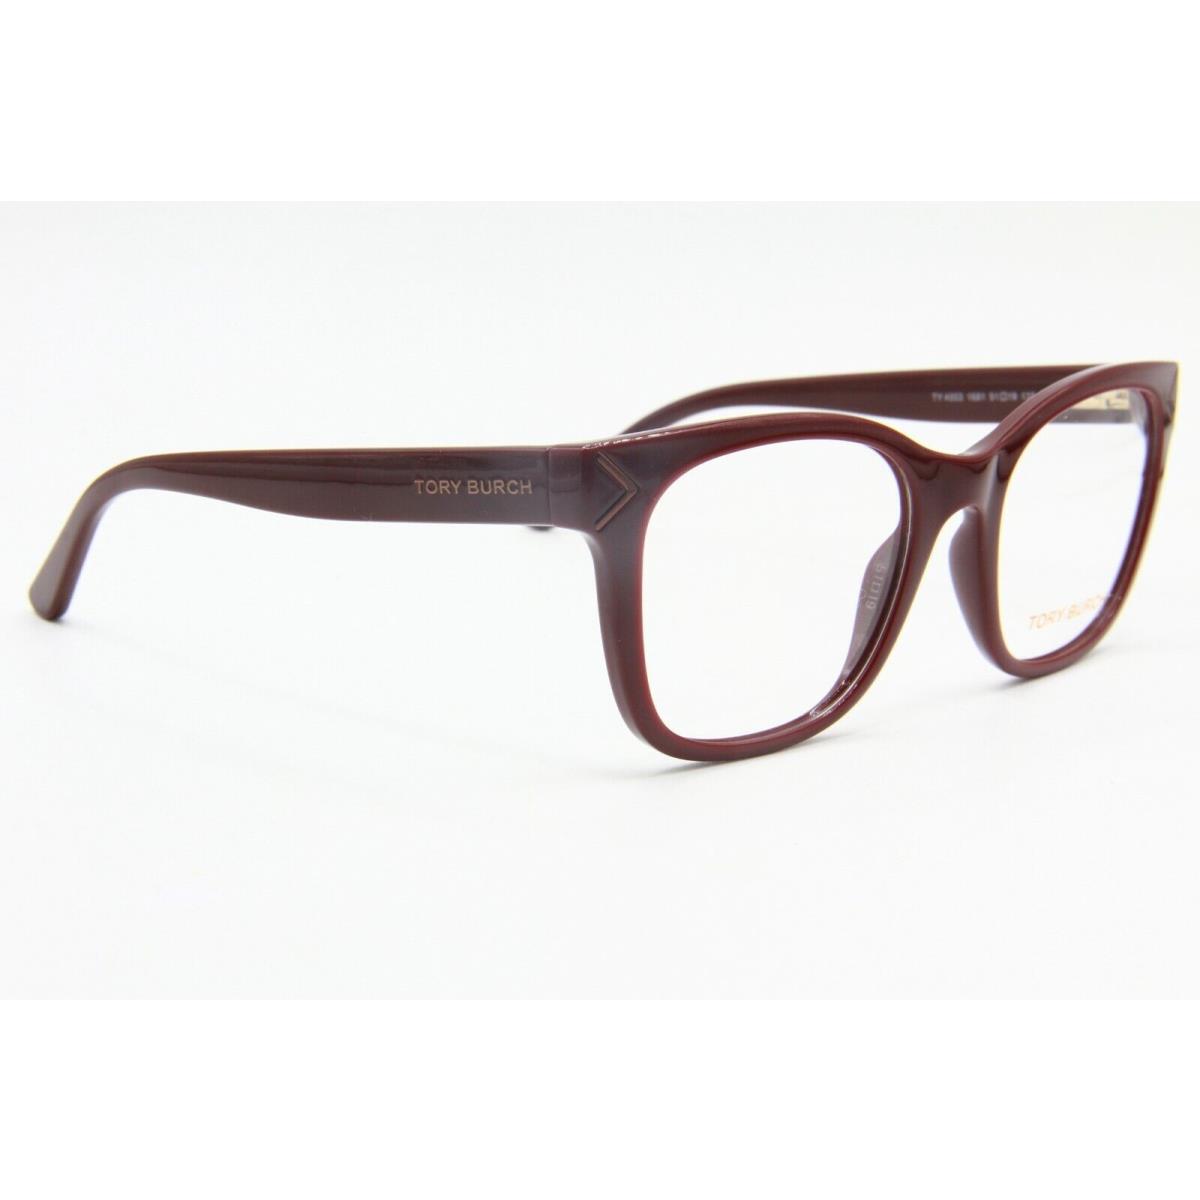 Tory Burch eyeglasses  - Red Frame 1